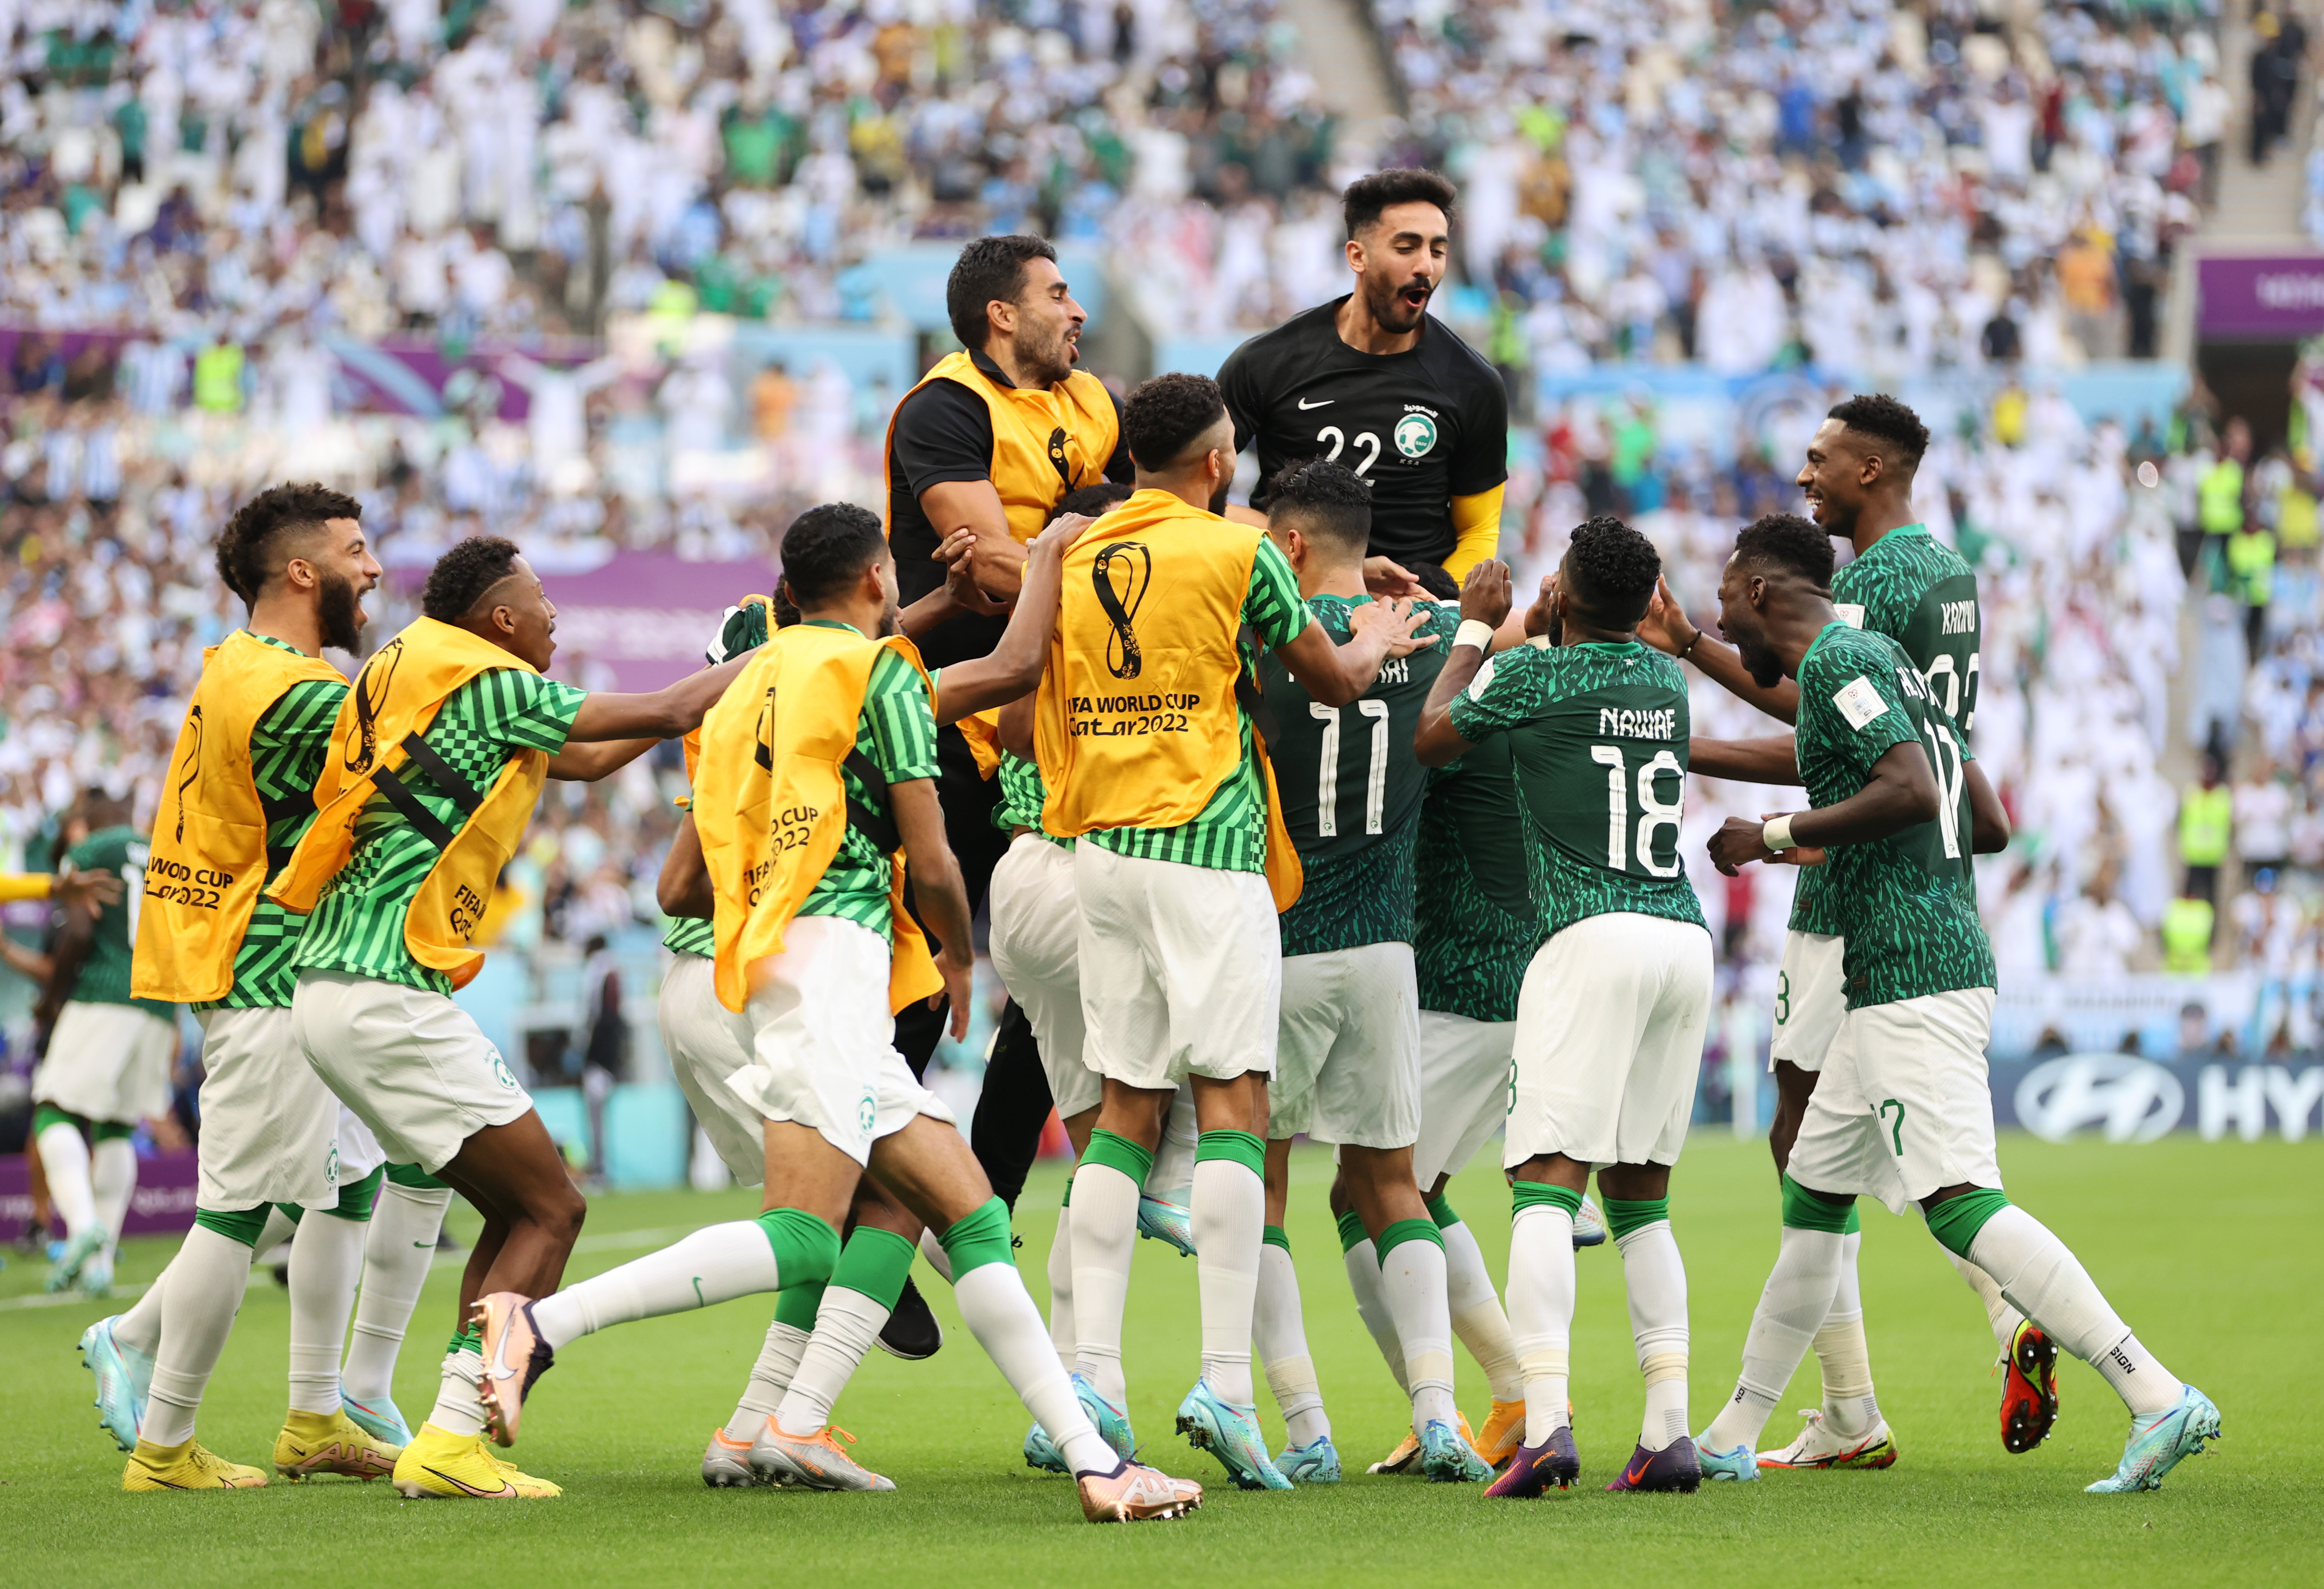 Saudi cup